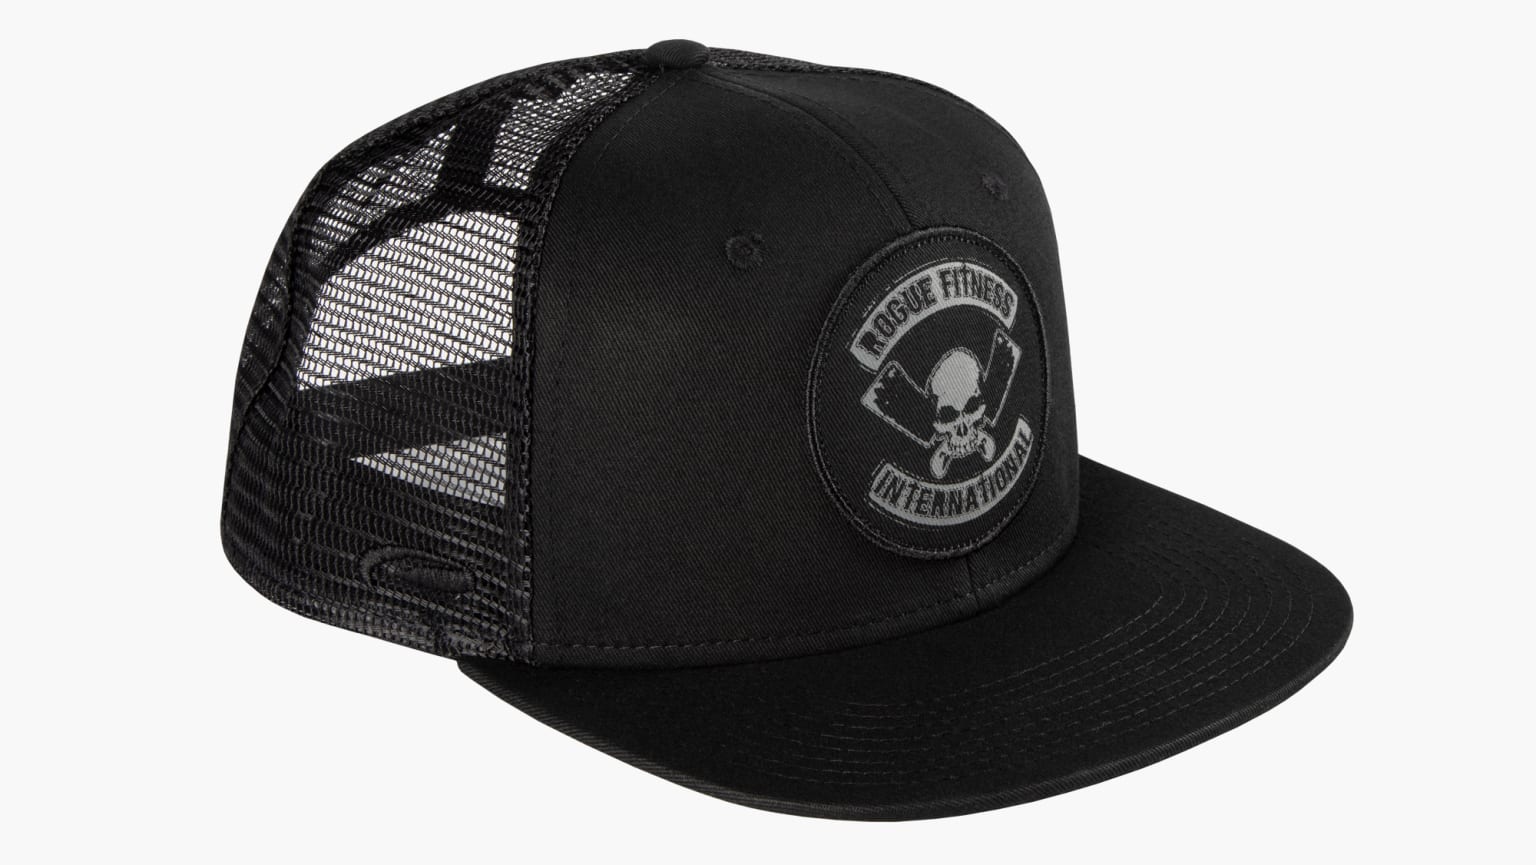 Rogue International Flat Bill Hat - Trucker Hat / Baseball Cap